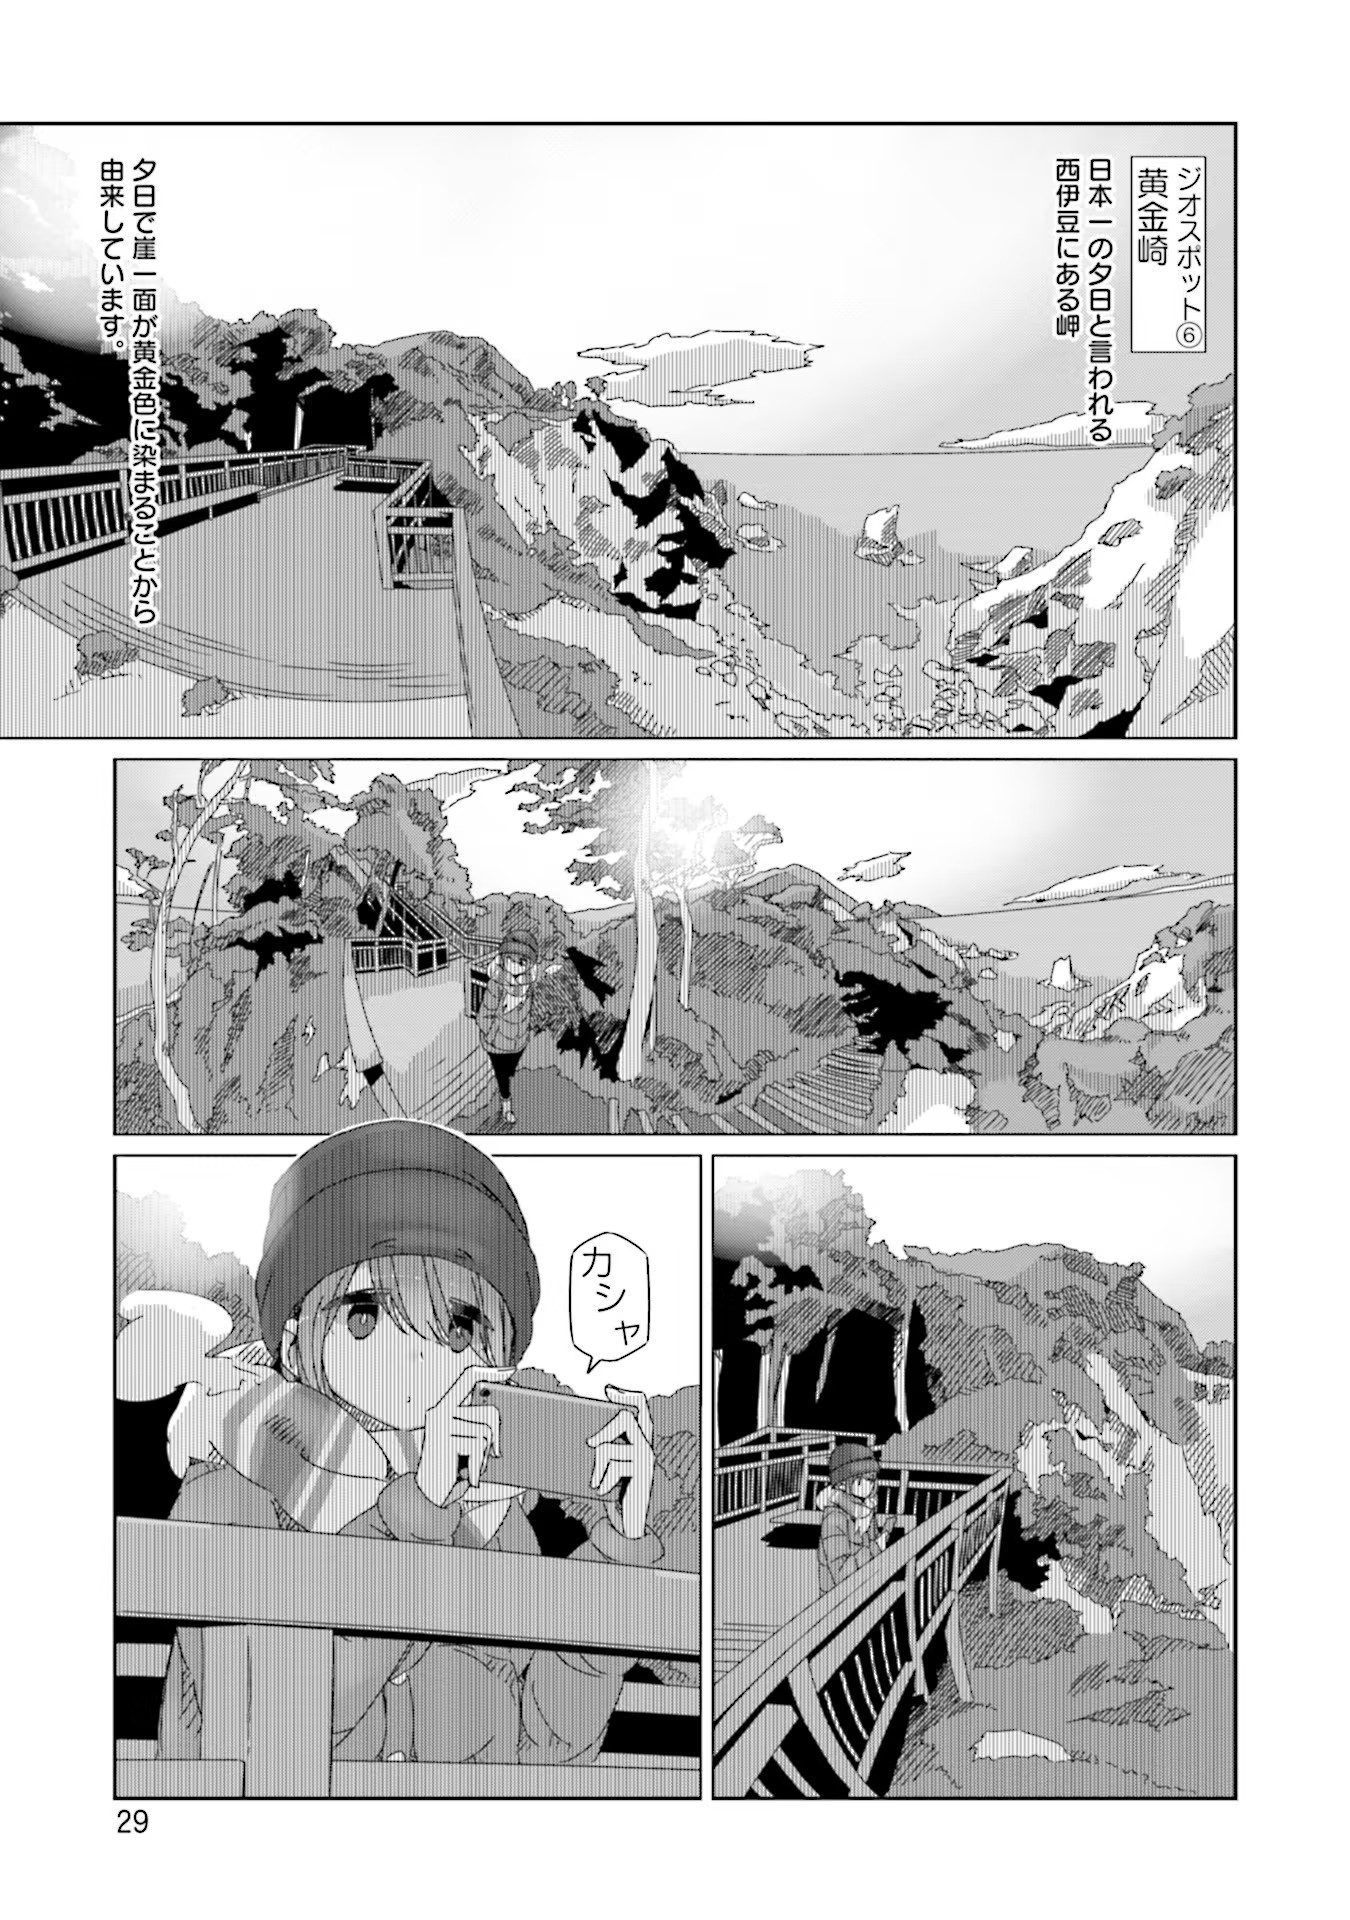 Yuru Camp - Chapter 48 - Page 1